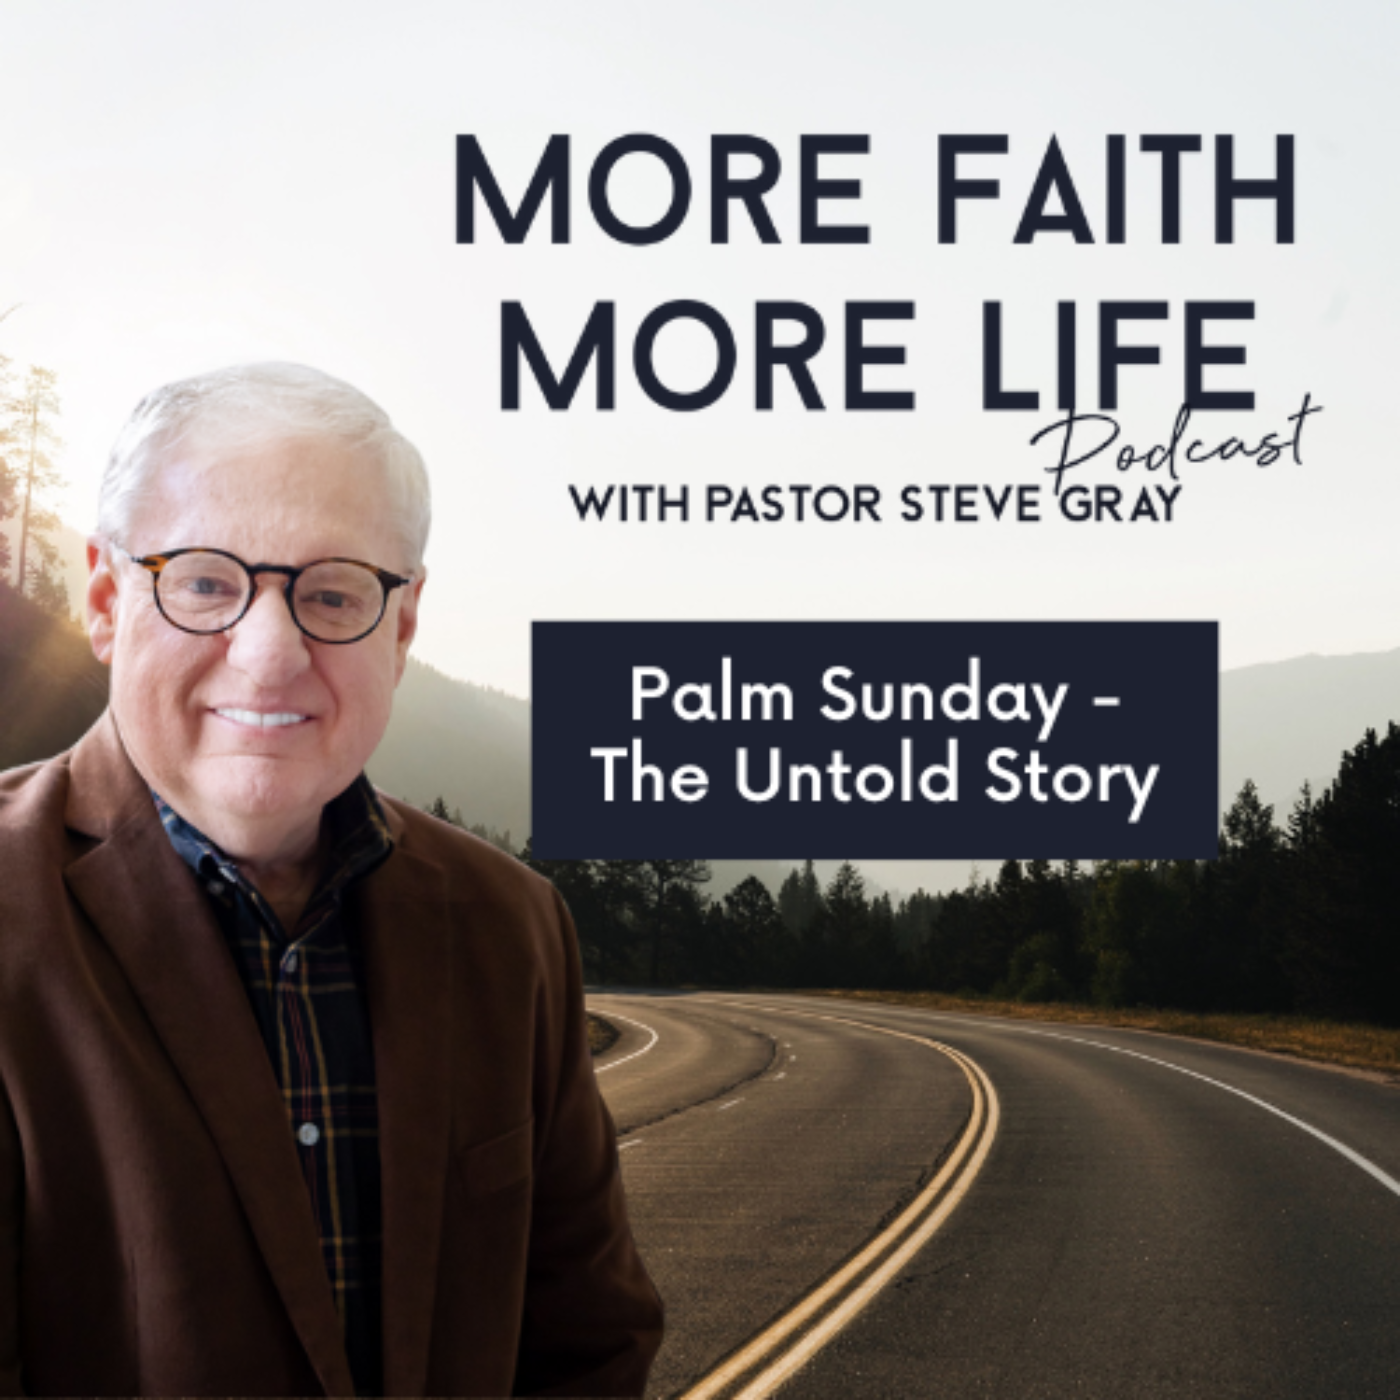 Palm Sunday - The Untold Story  |  #49